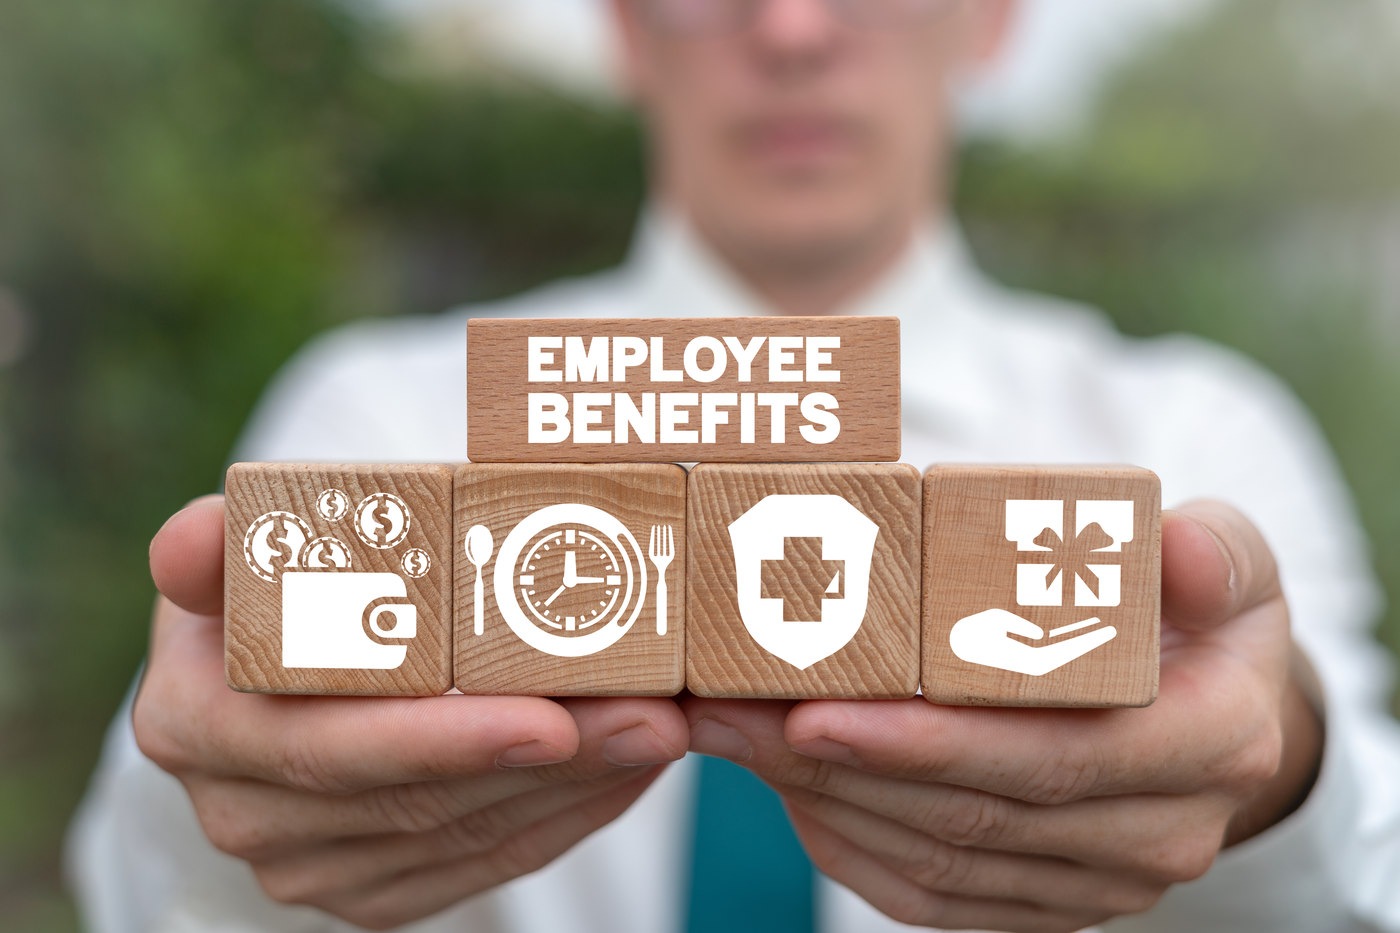 Employee Benefits Products Image